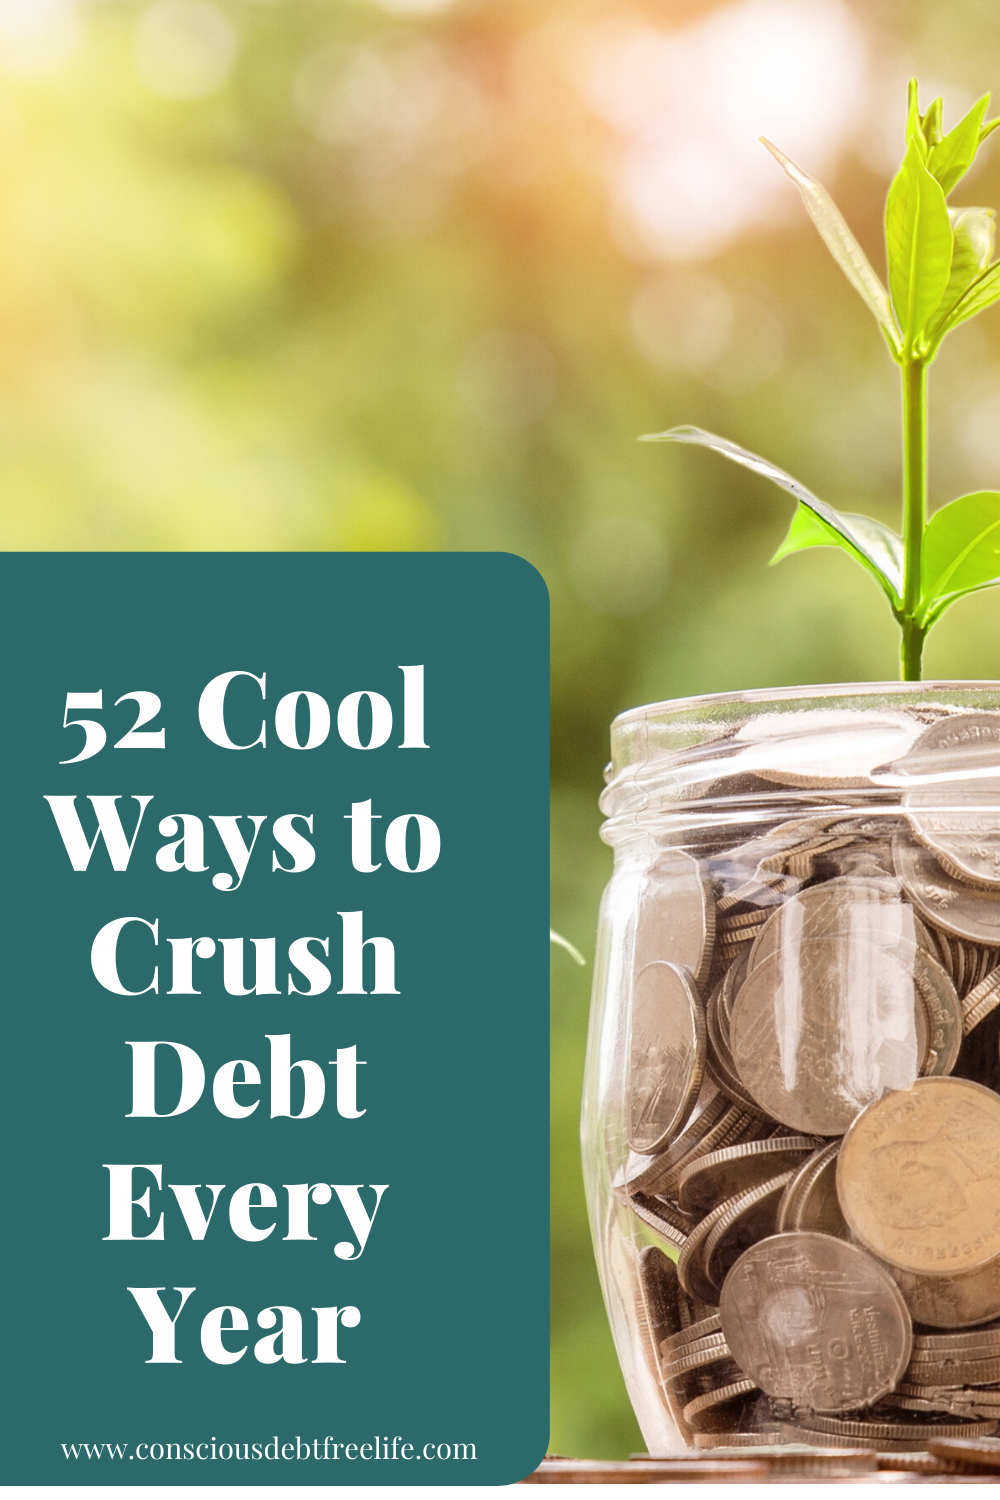 52 cool ways we kick the debt every single year.